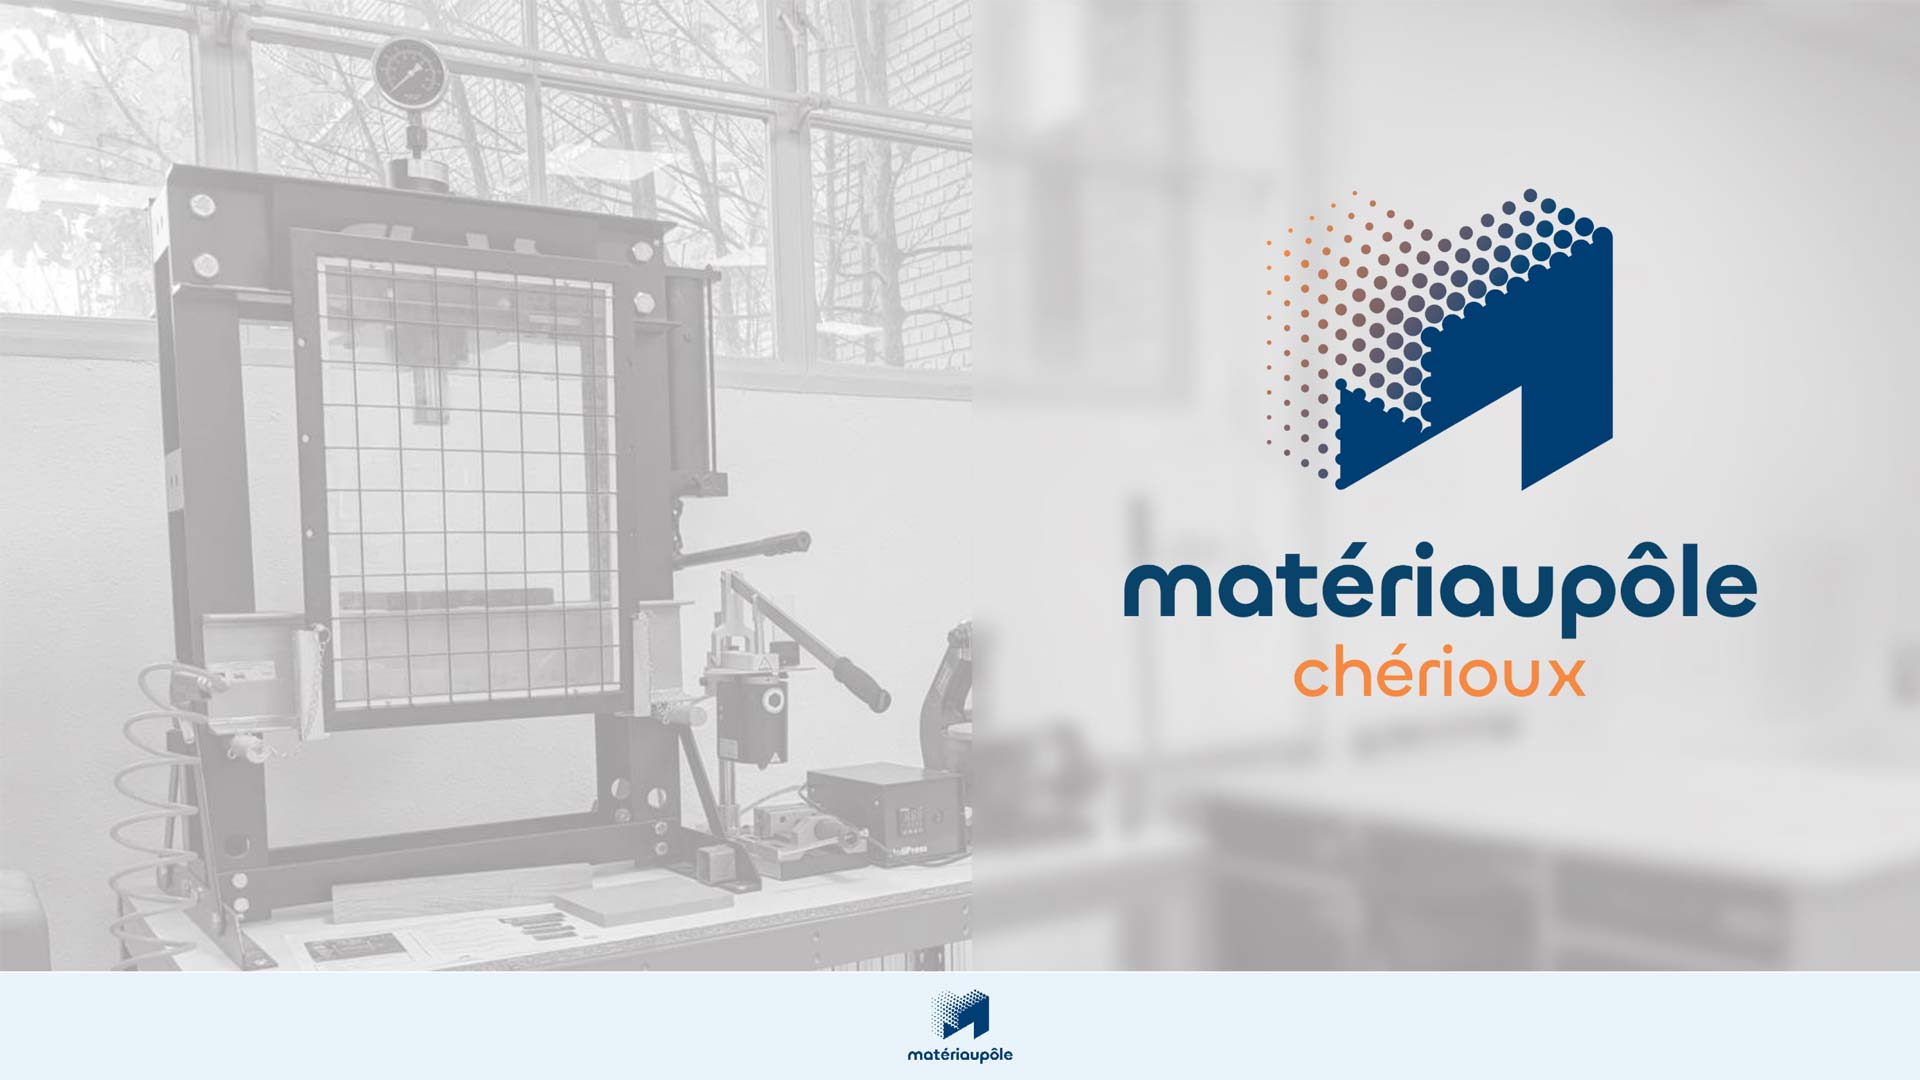 Matériaupôle Chérioux: impulsar la innovación en materiales